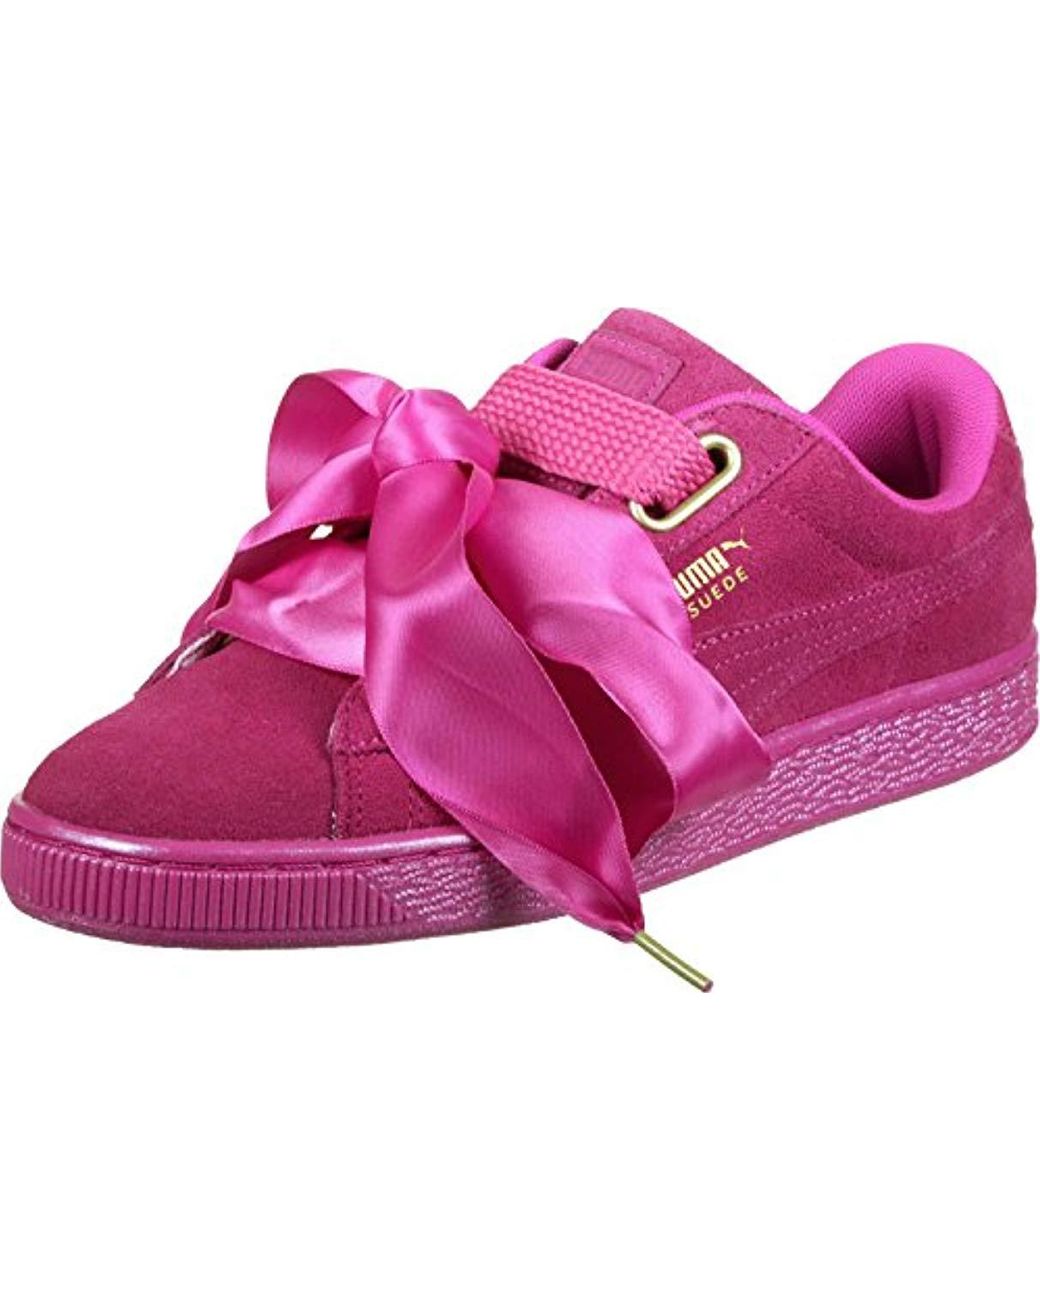 PUMA Suede Heart Safari Low-top Sneakers in Rose (Pink) - Save 17% - Lyst